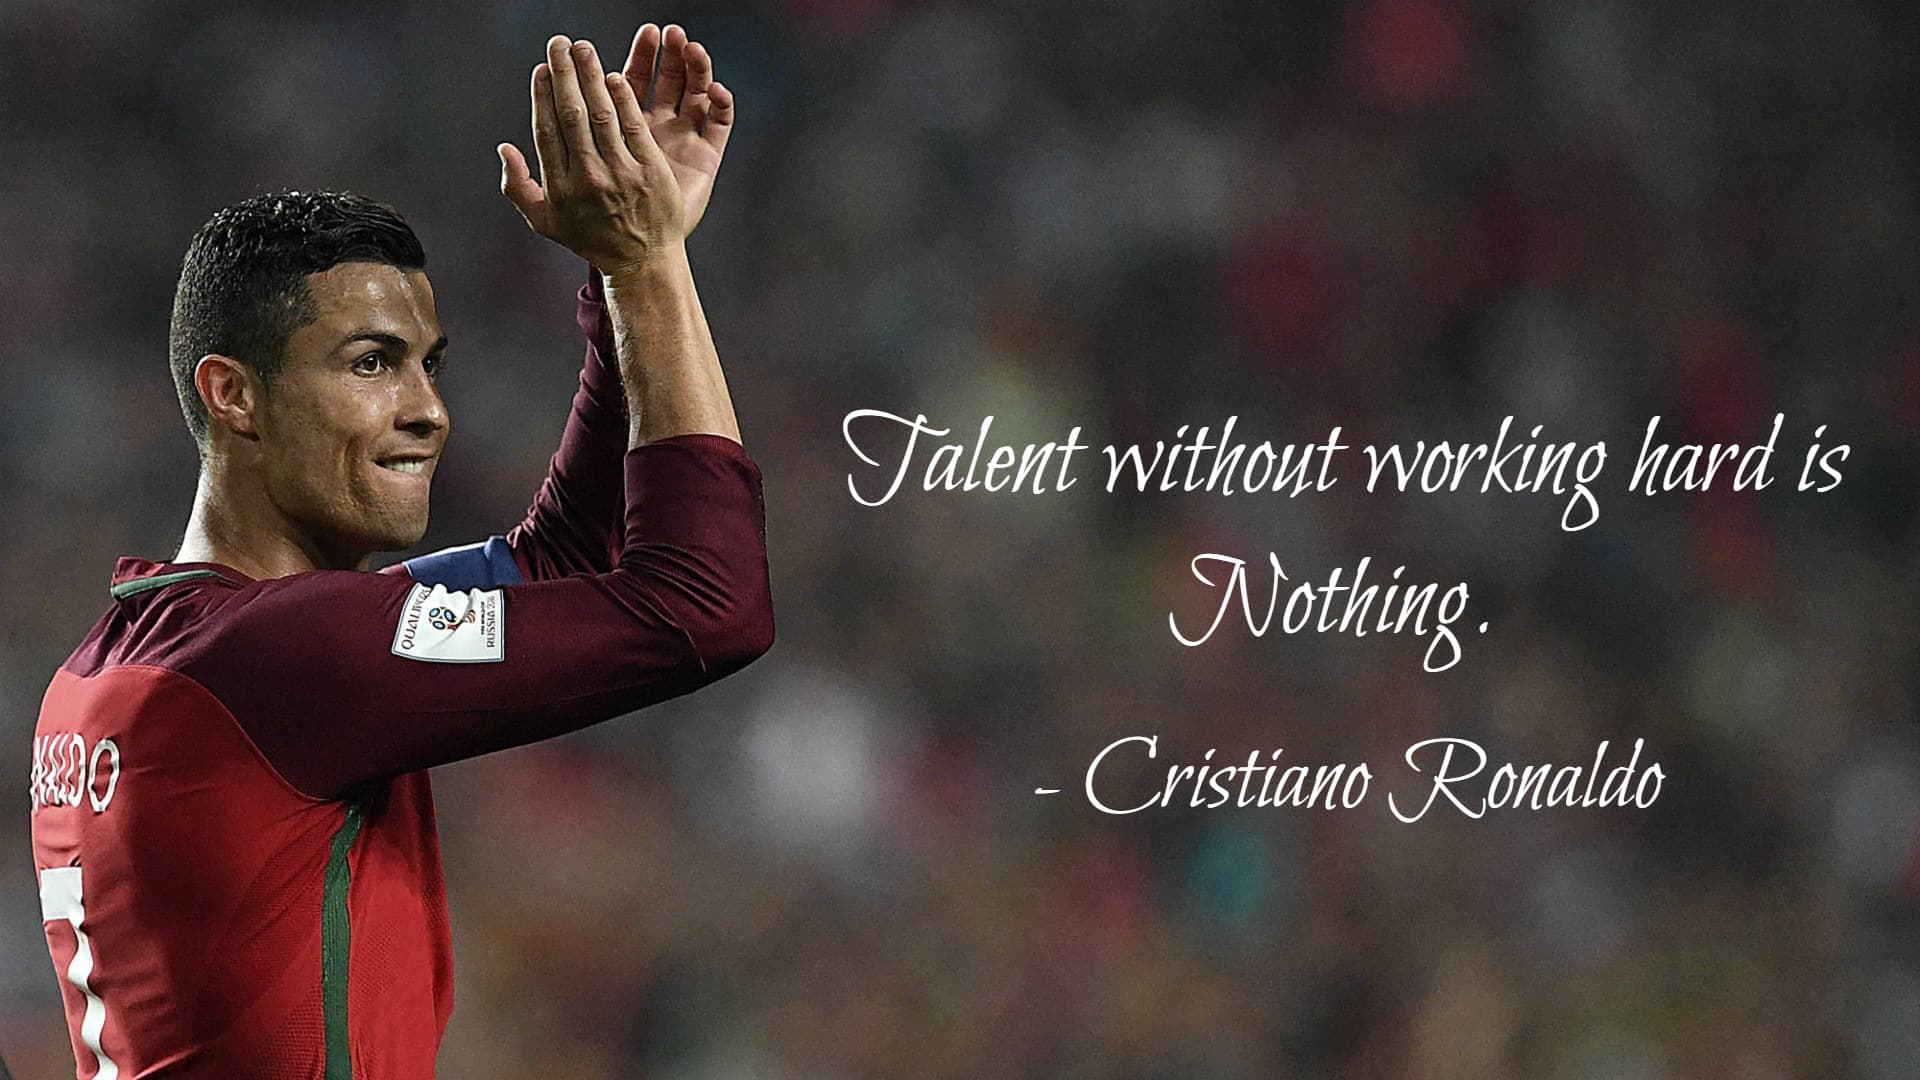 Cristiano Ronaldo Best Quotes on football